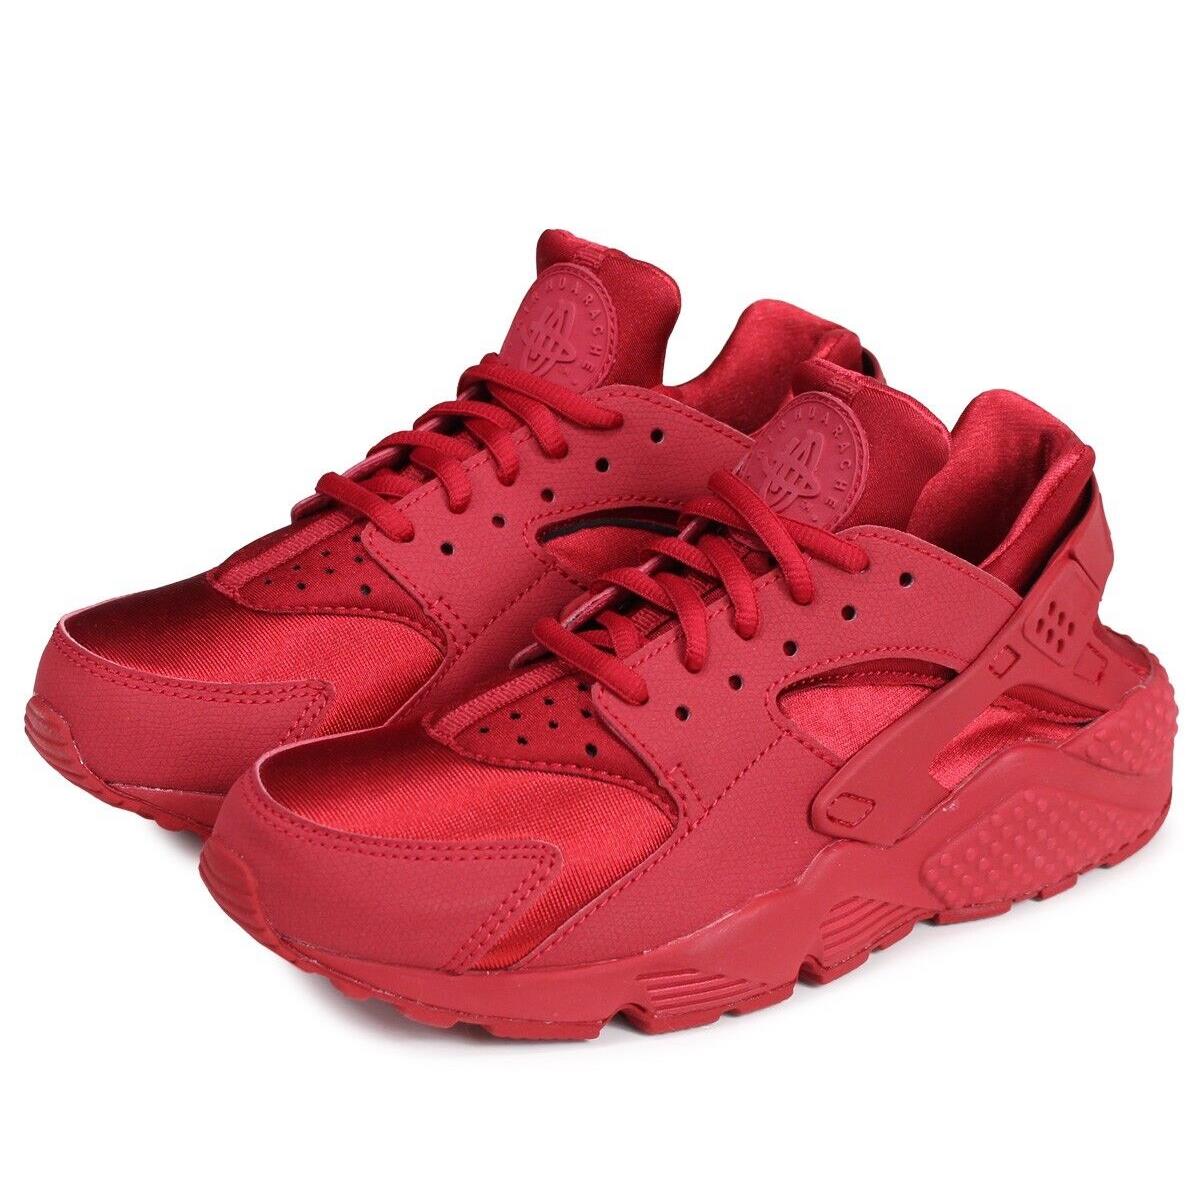 Nike Air Huarache Run Womens Size 6 Sneaker Shoes 634835 601 Red October